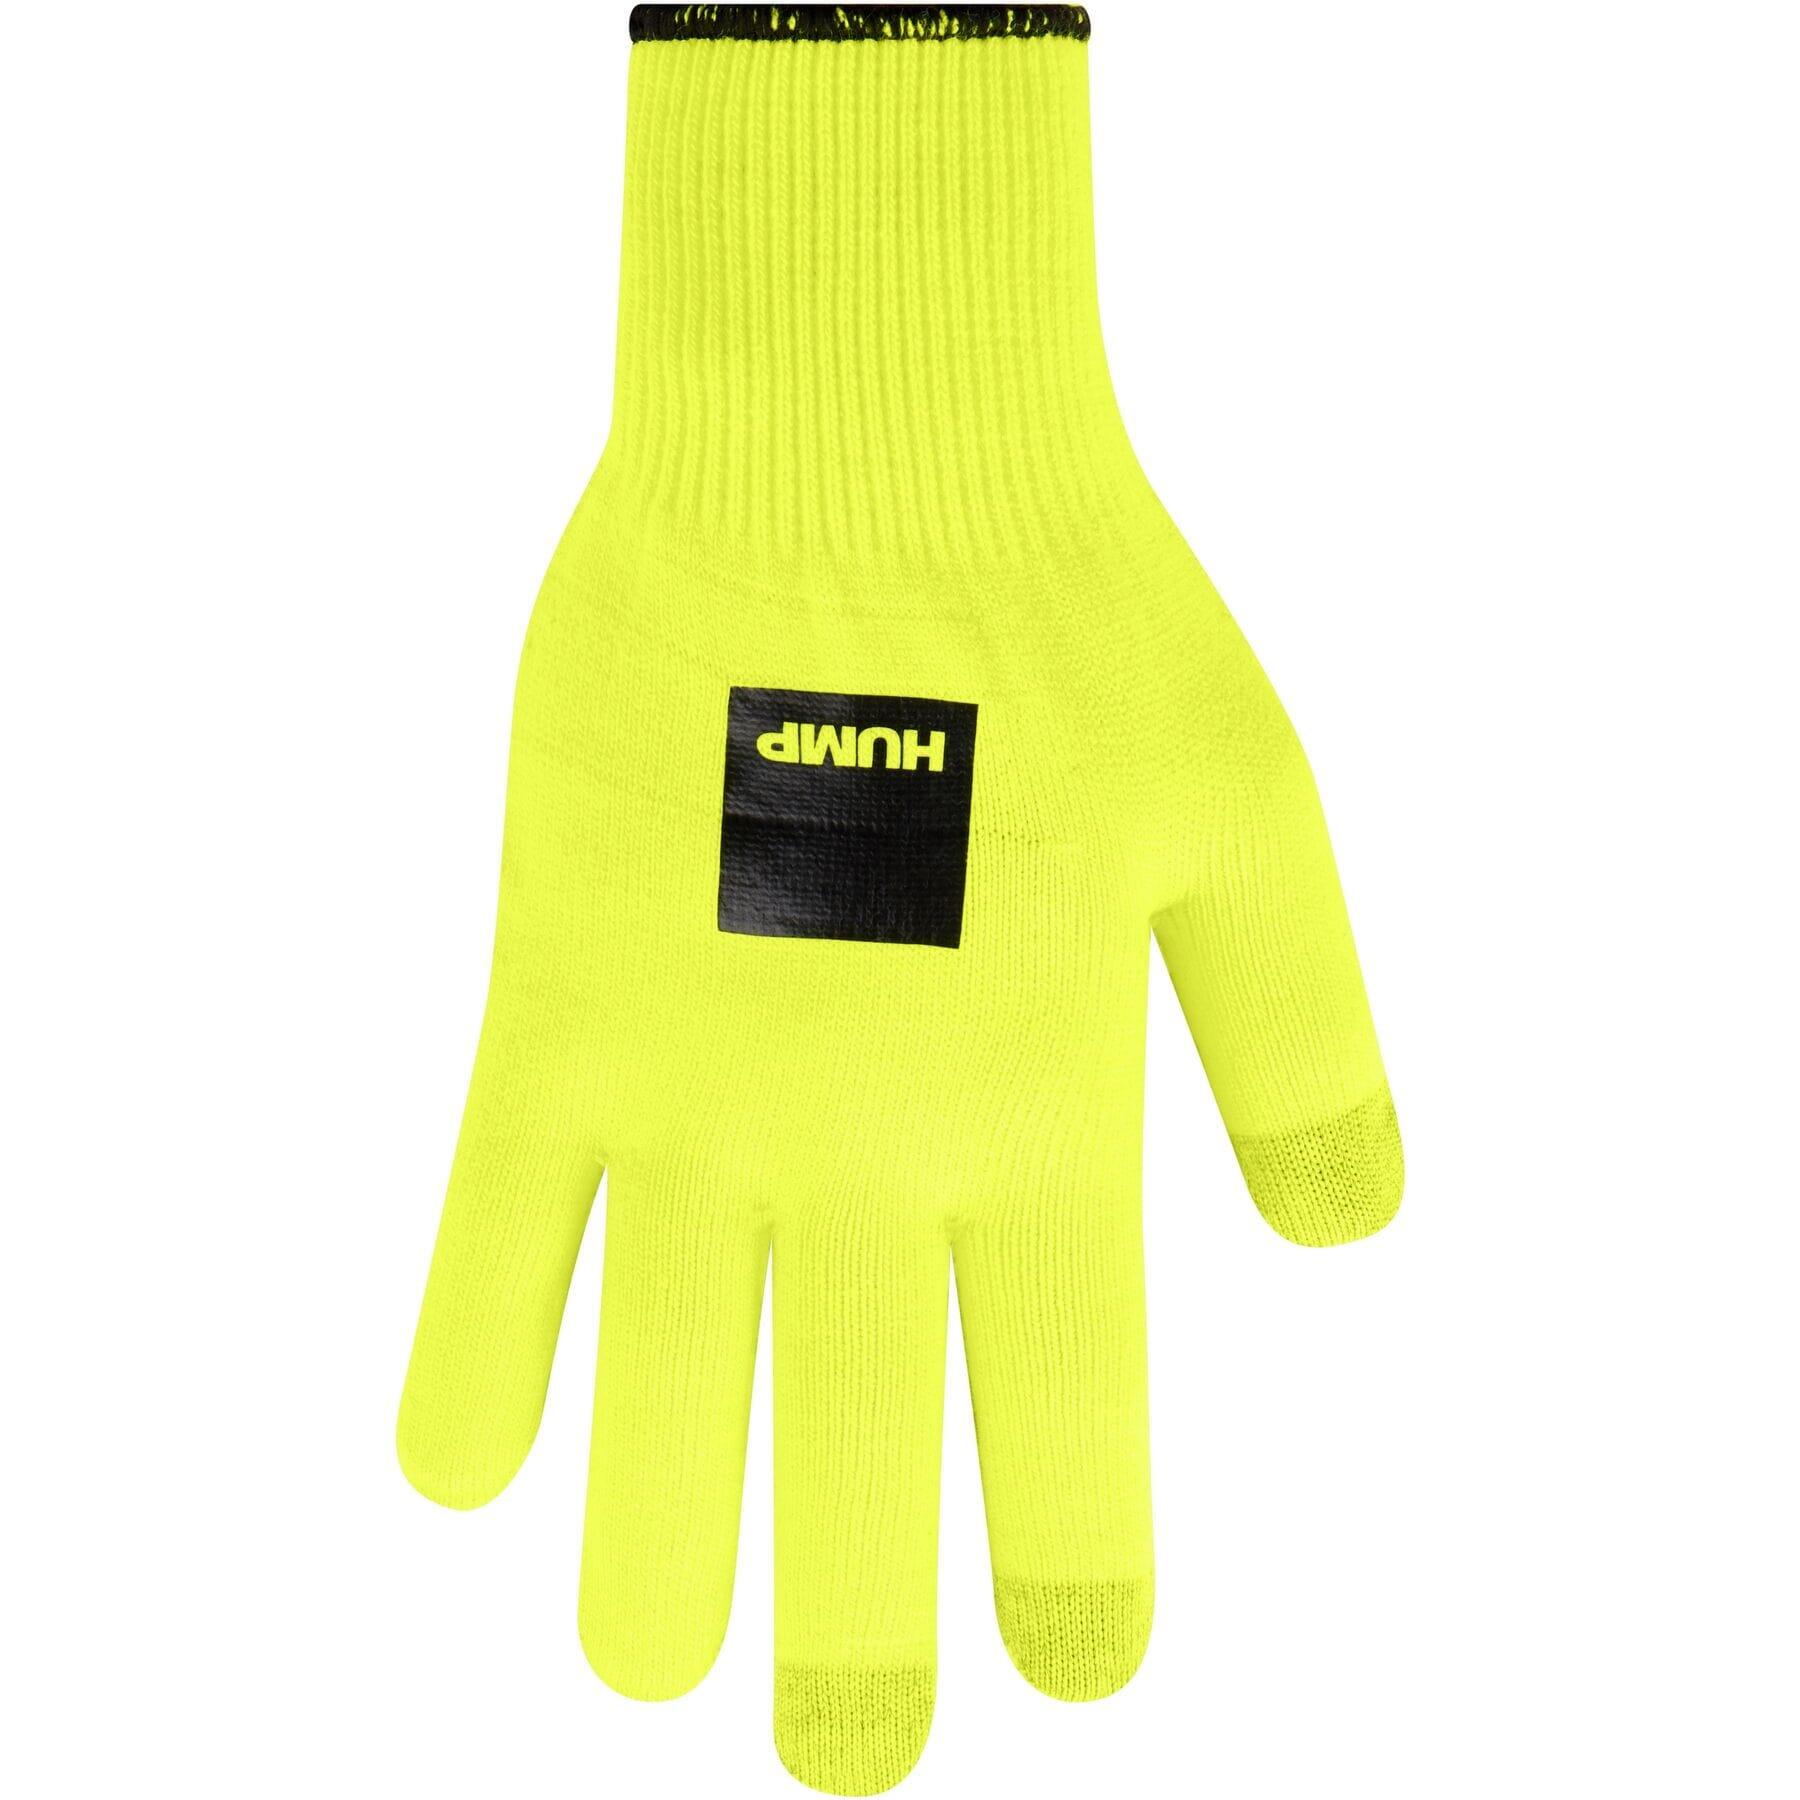 HUMP HUMP Pocket Thermal Glove - Black / Hi-Viz Yellow - Medium - Large